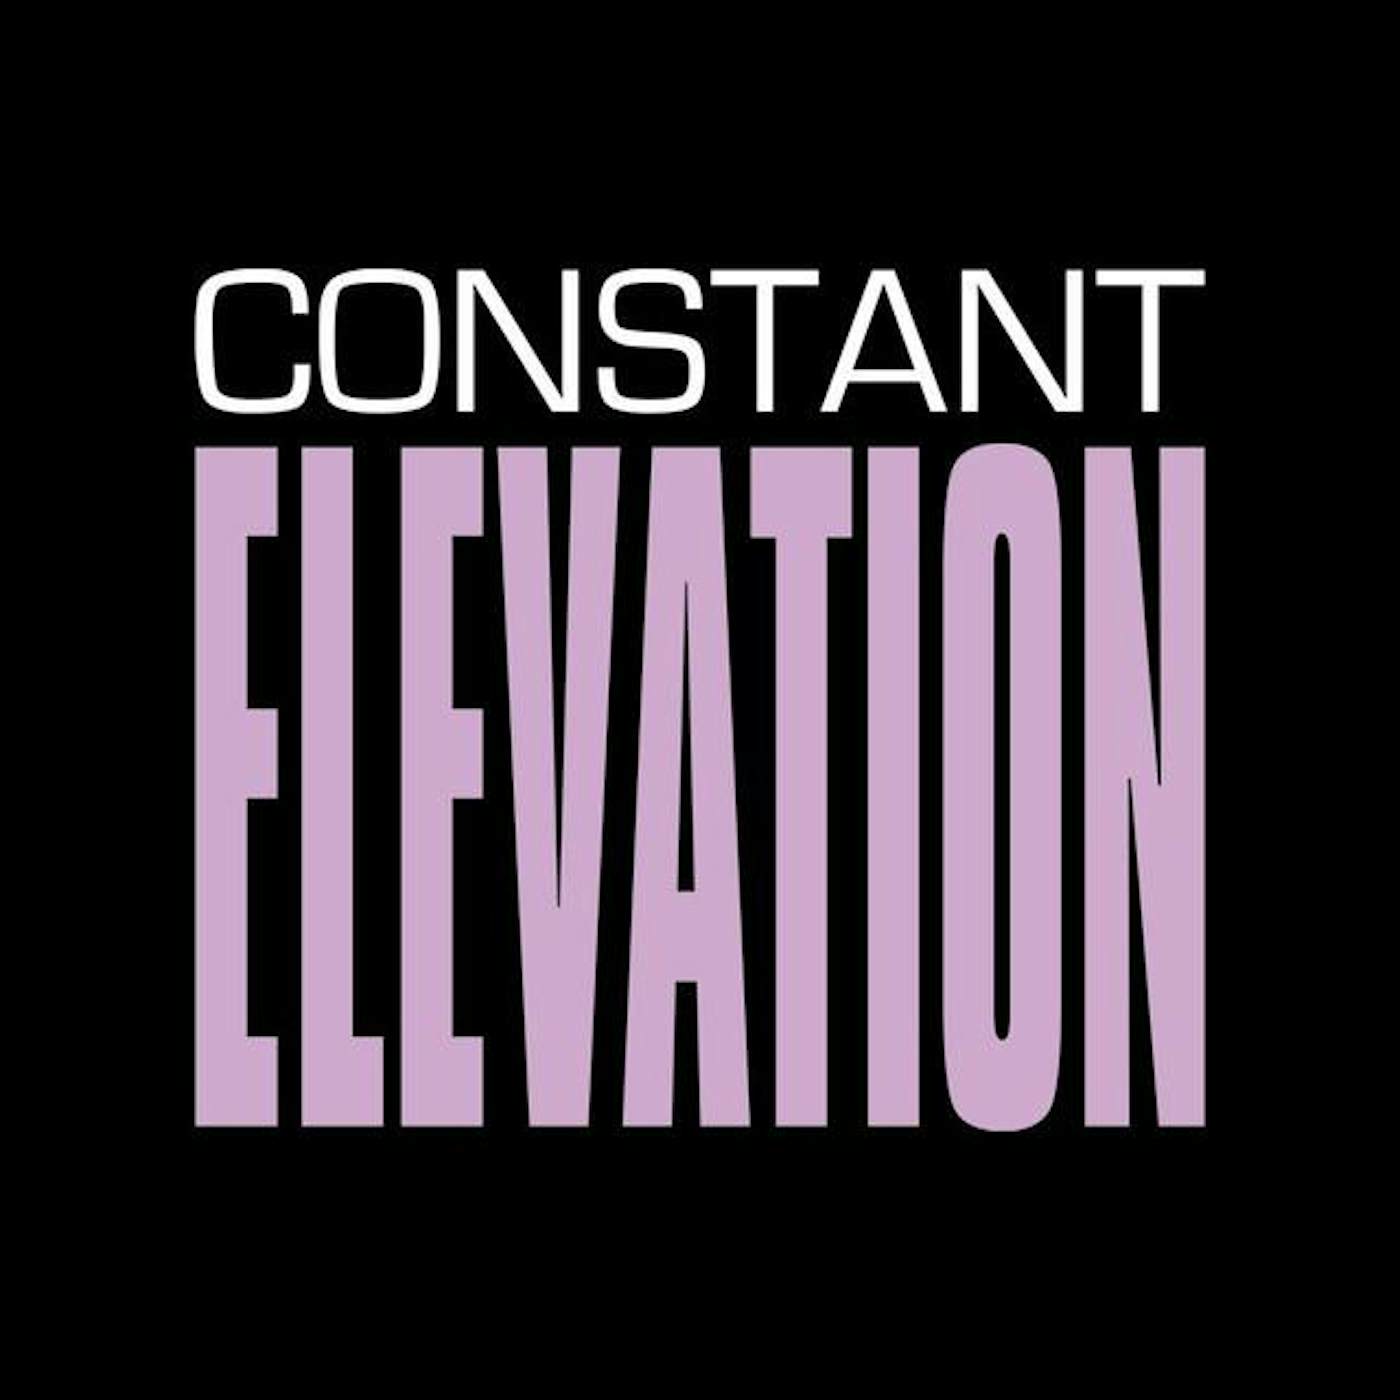 Constant Elevation